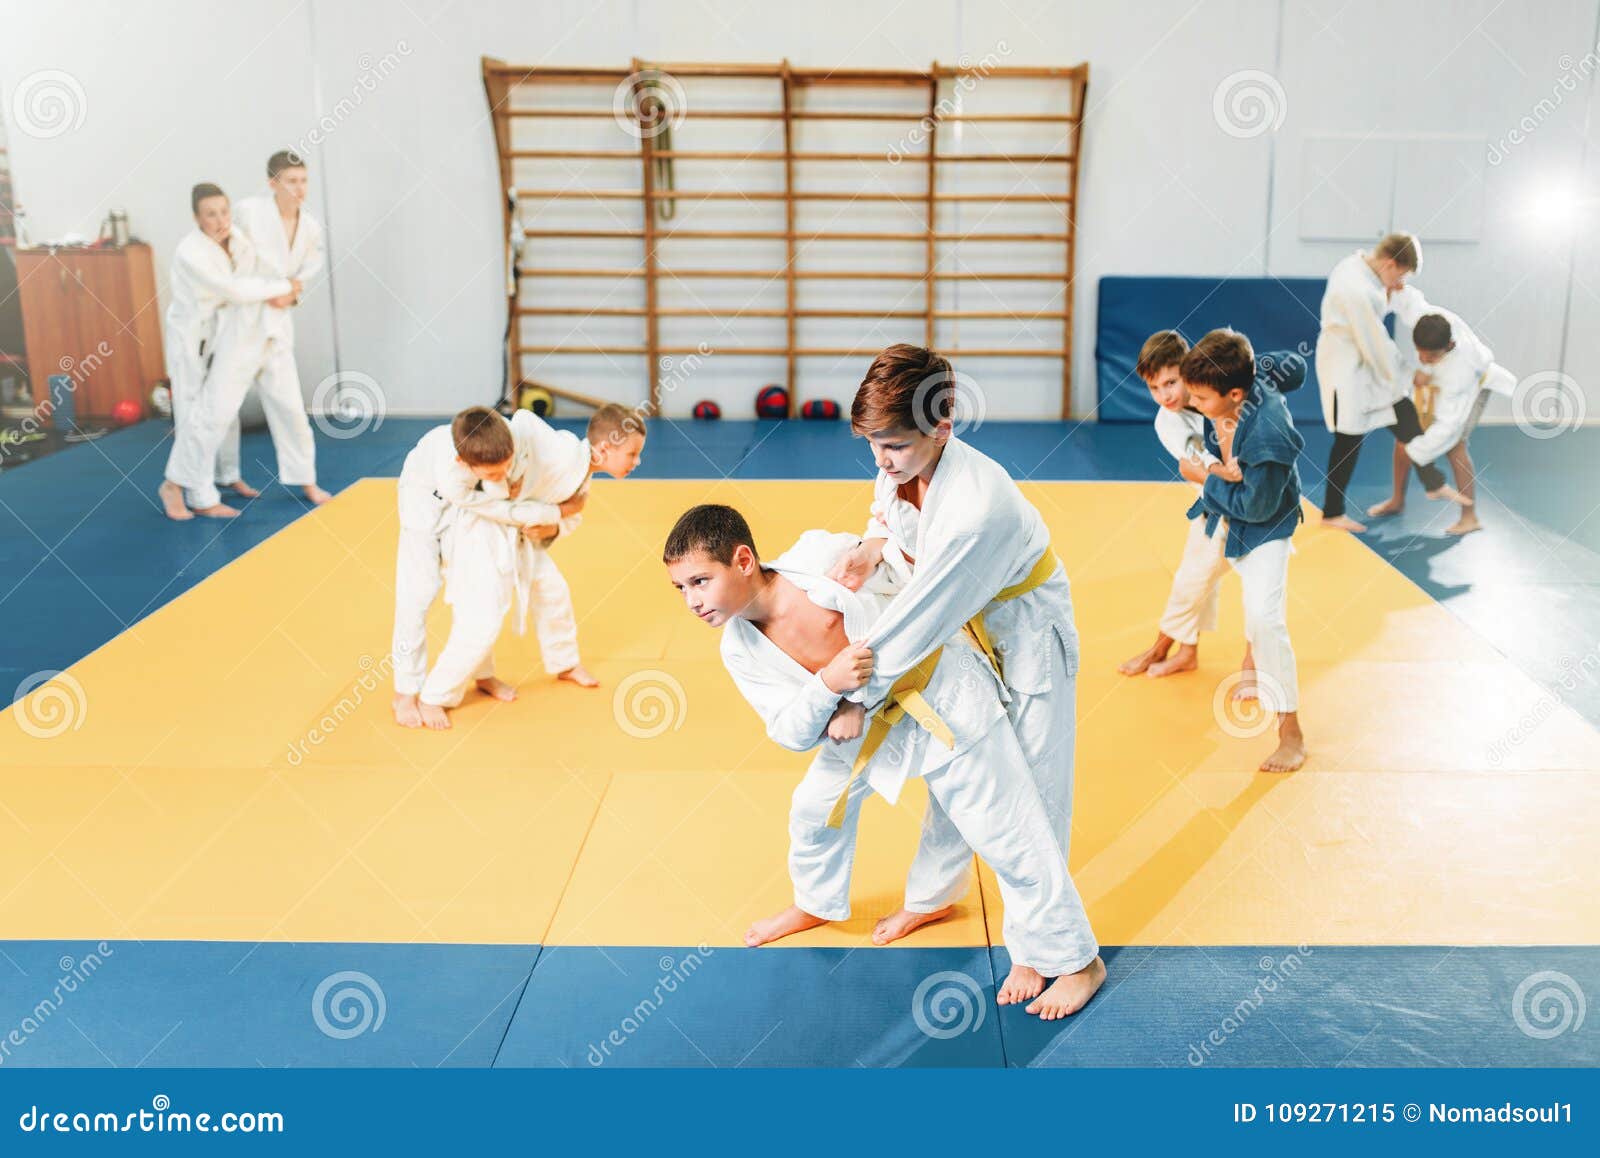 kid judo, childrens training, self-defense